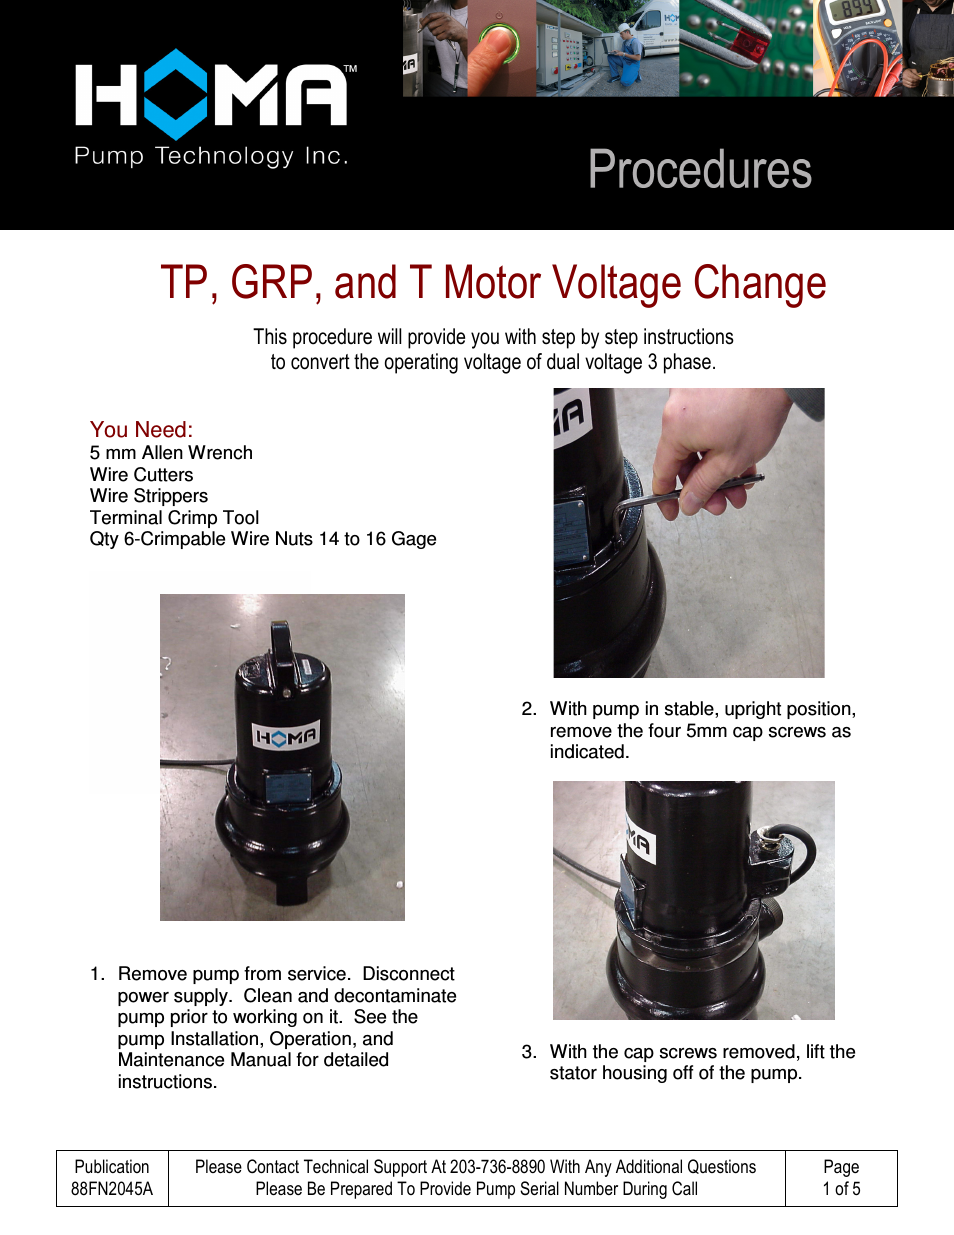 TP GRP T Motor Voltage Change